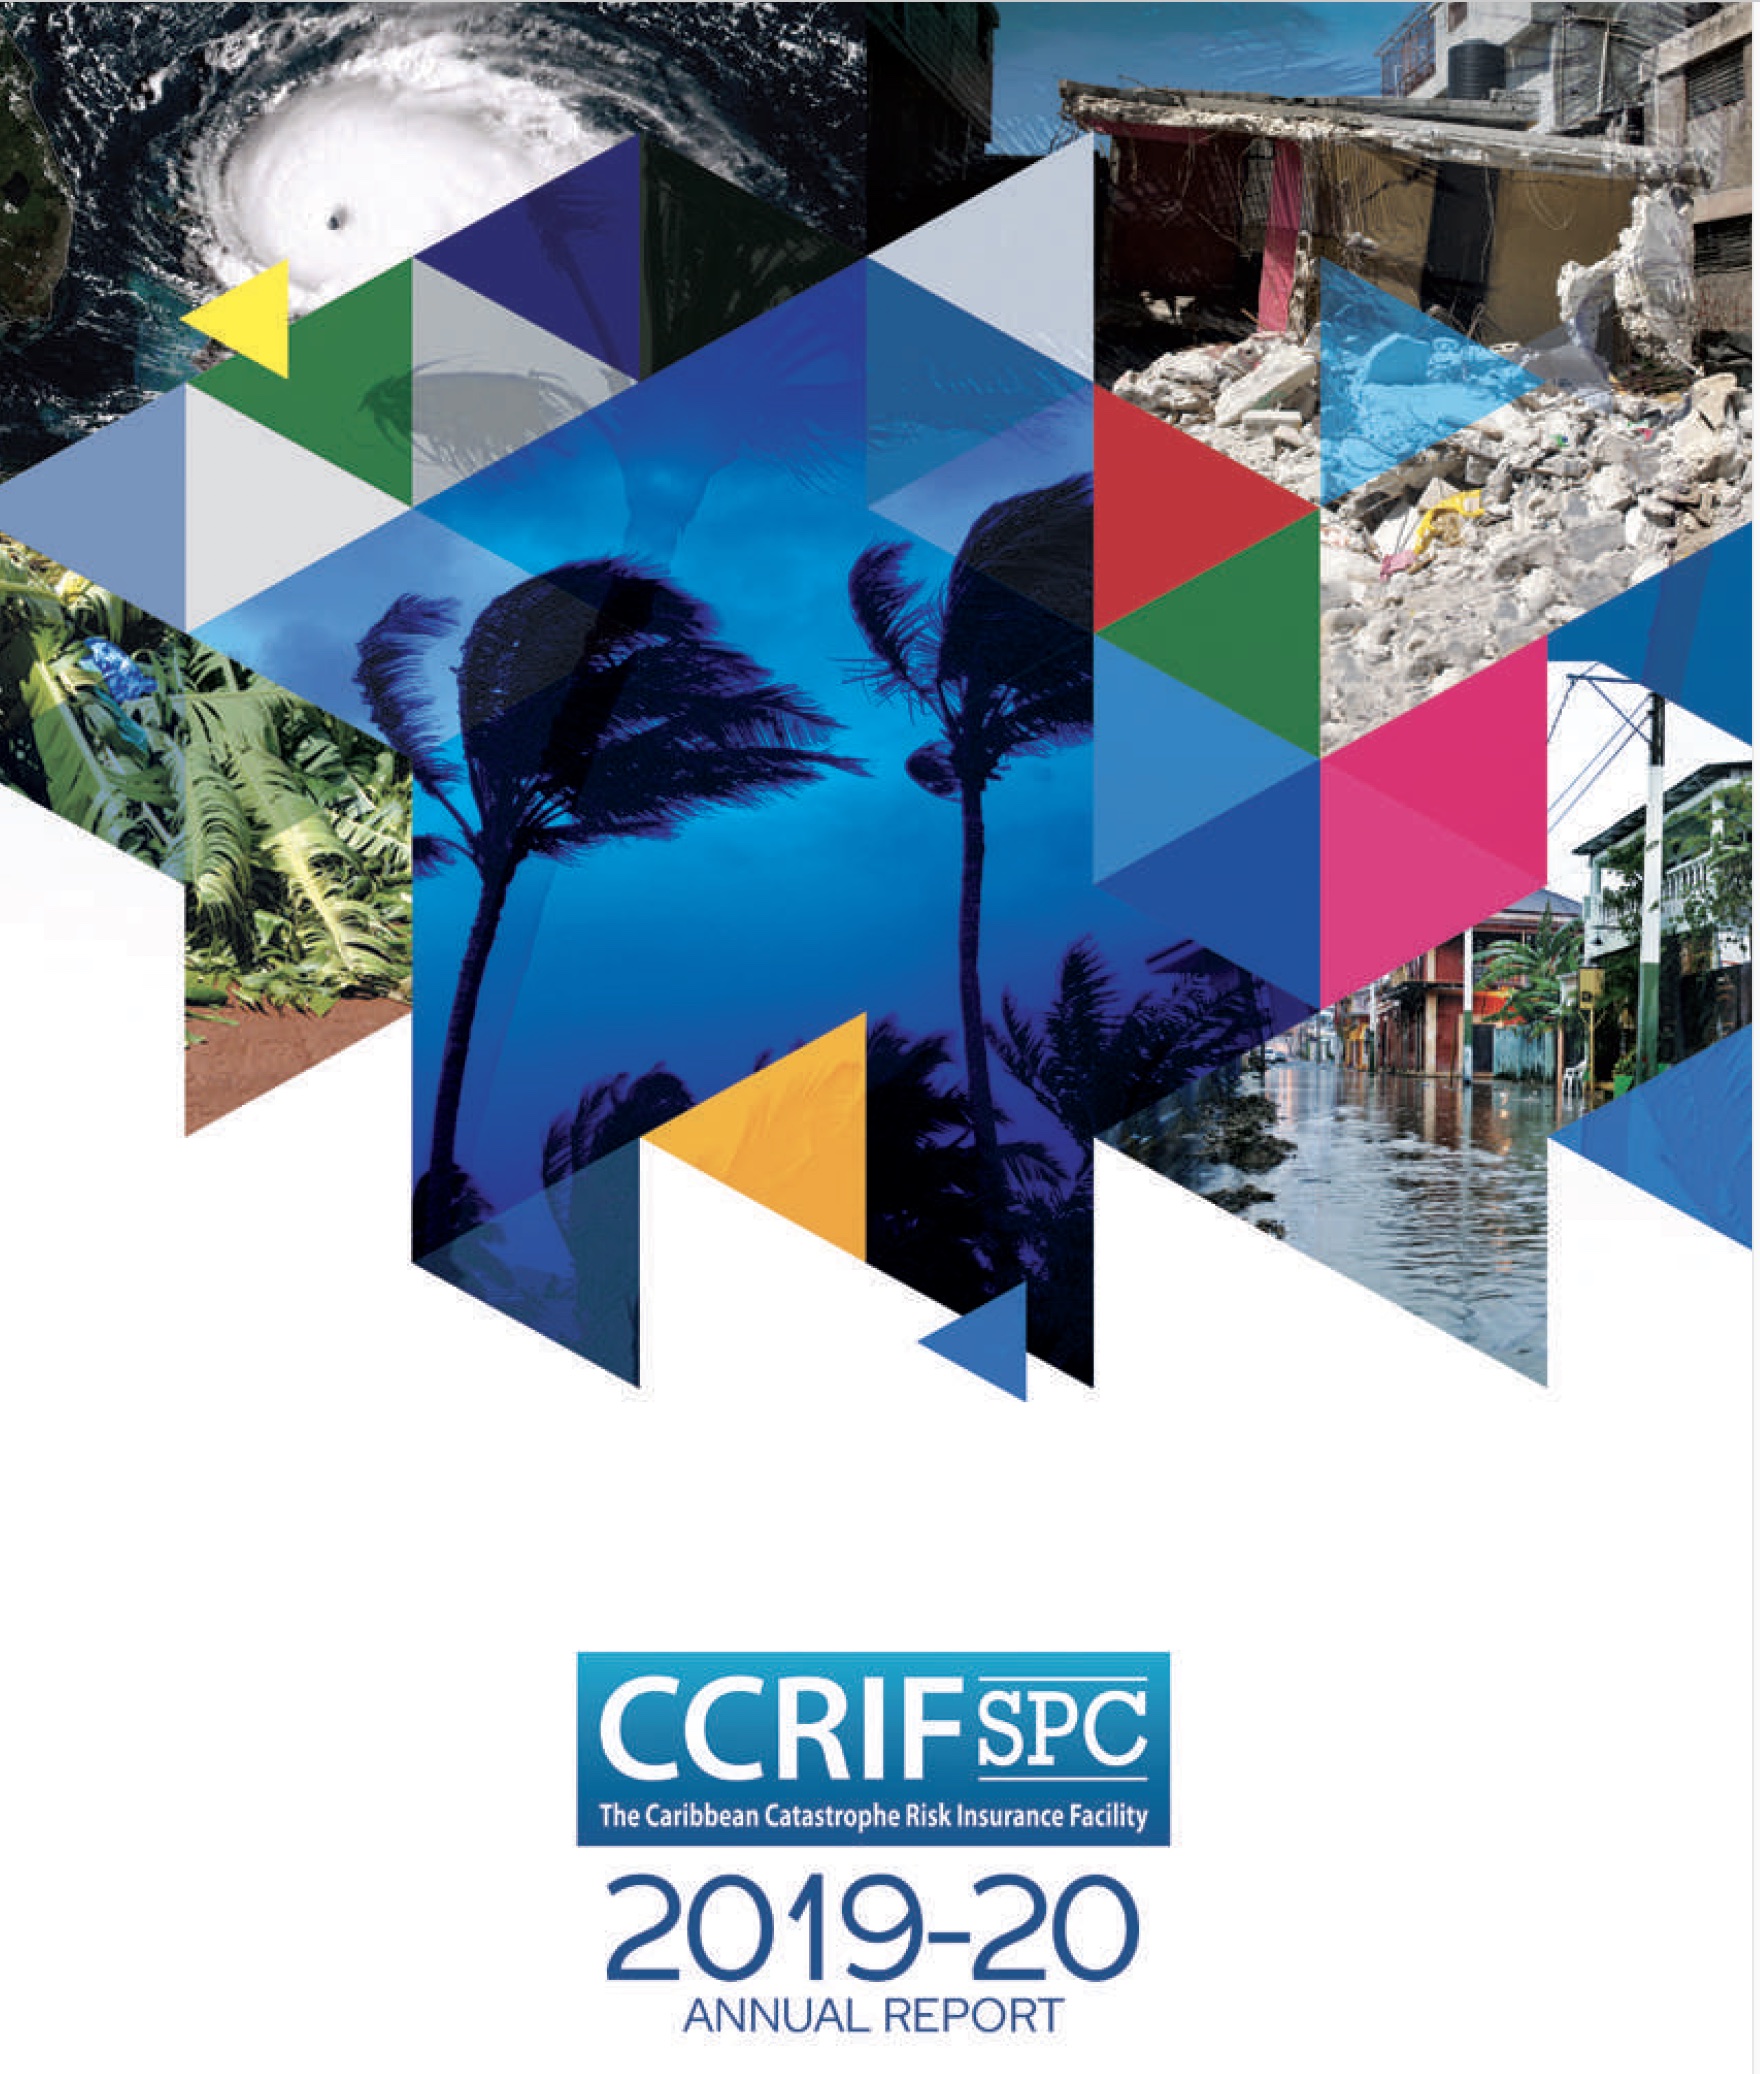 CCRIF SPC Annual Report 2019-20